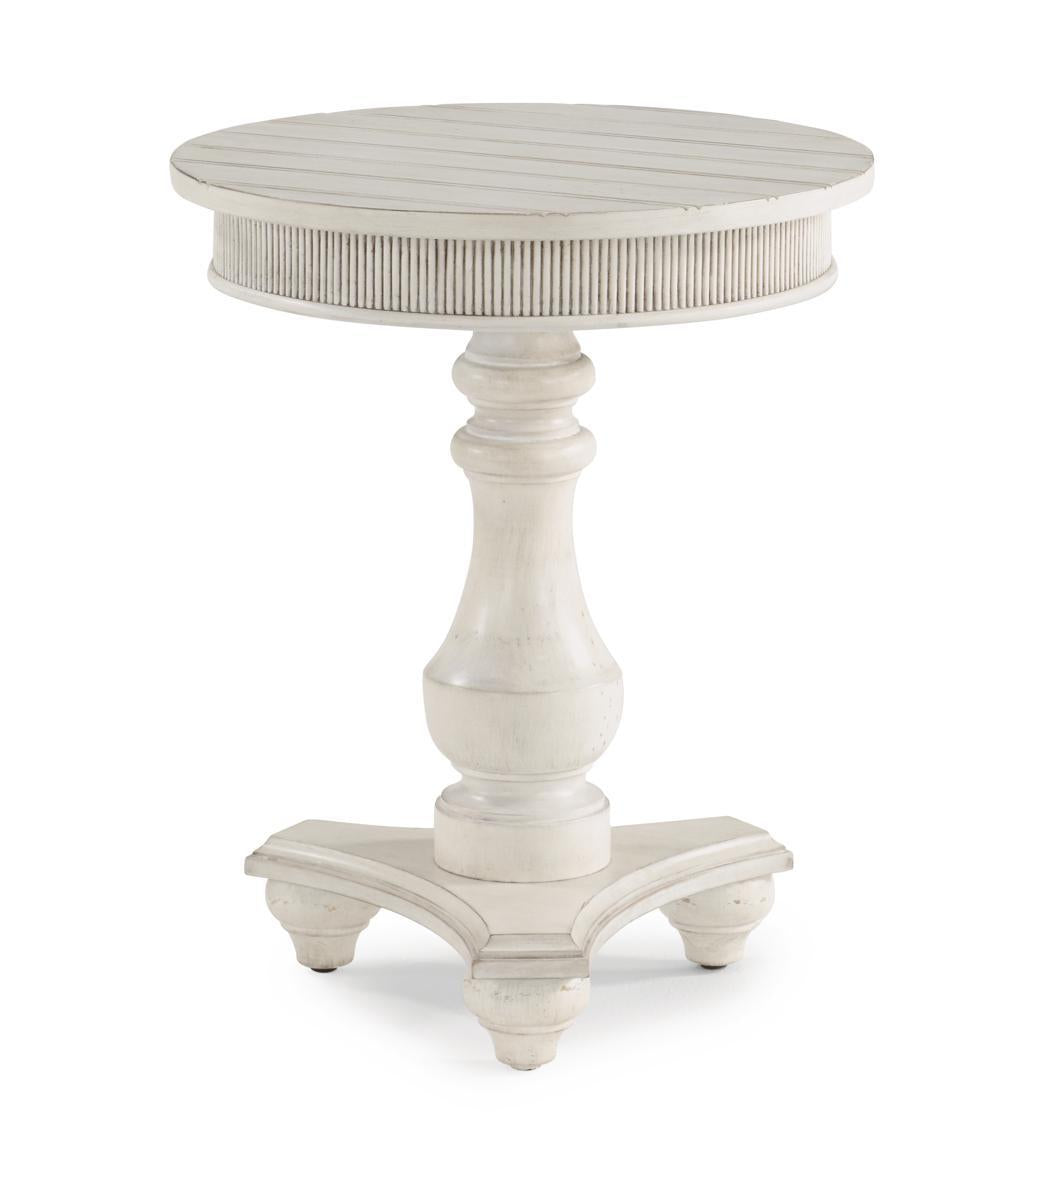 Flexsteel Harmony Round Chairside Table in White